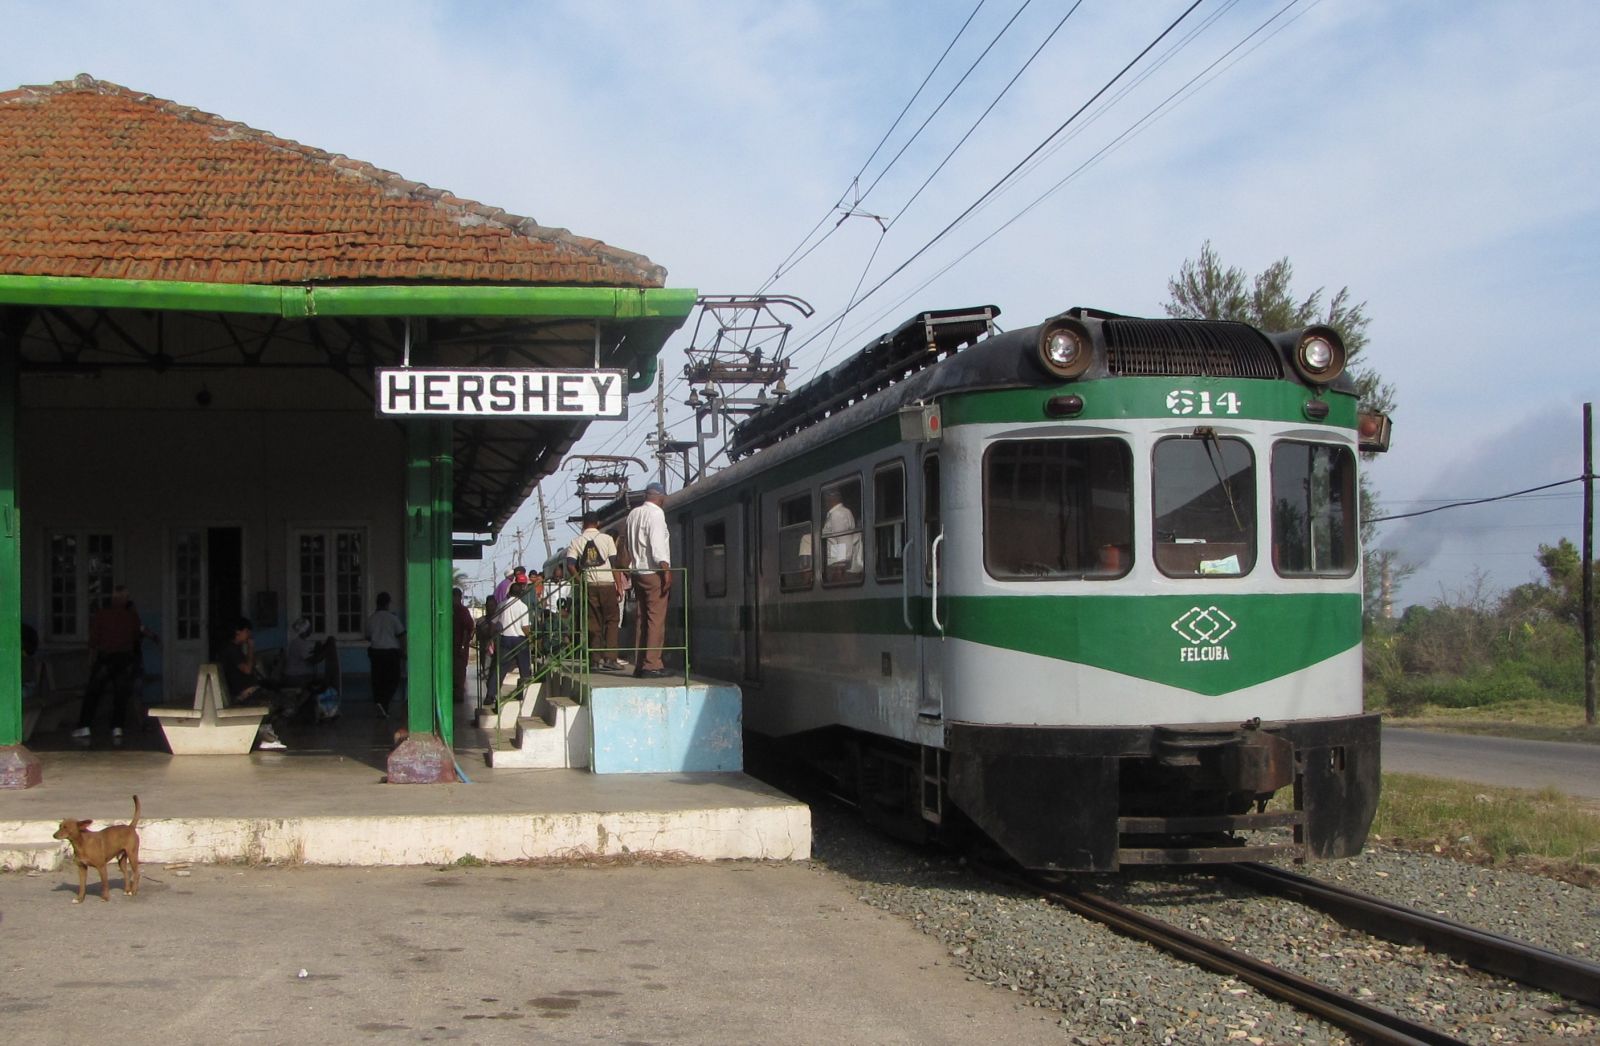 The Hershey Electric Railway, Cuba